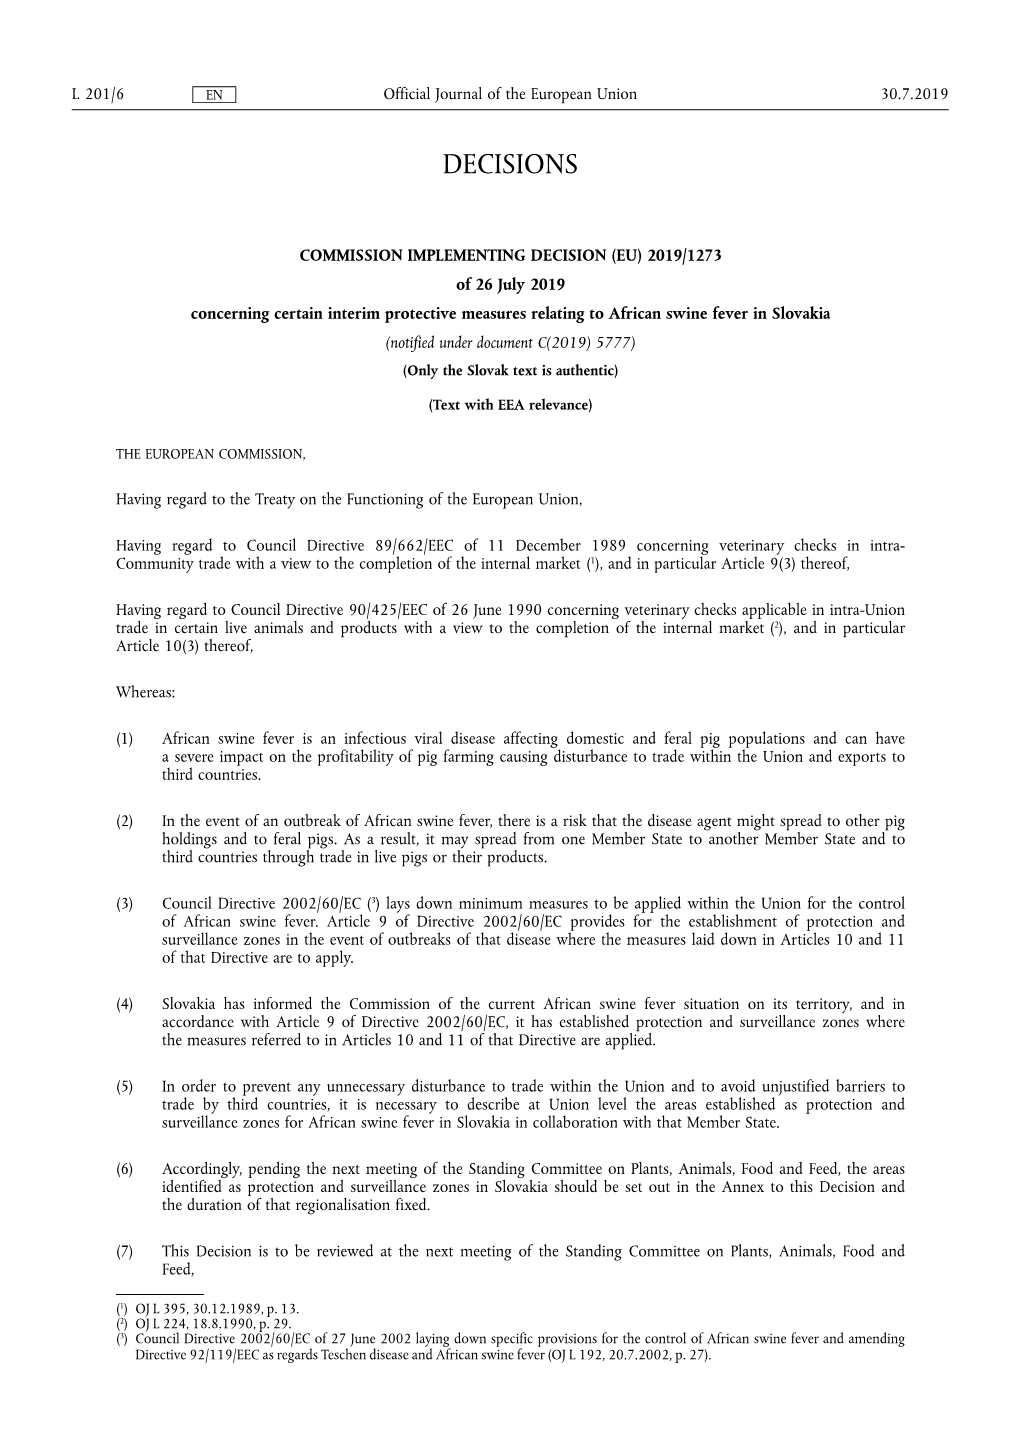 Commission Implementing Decision (Eu) 2019/ 1273